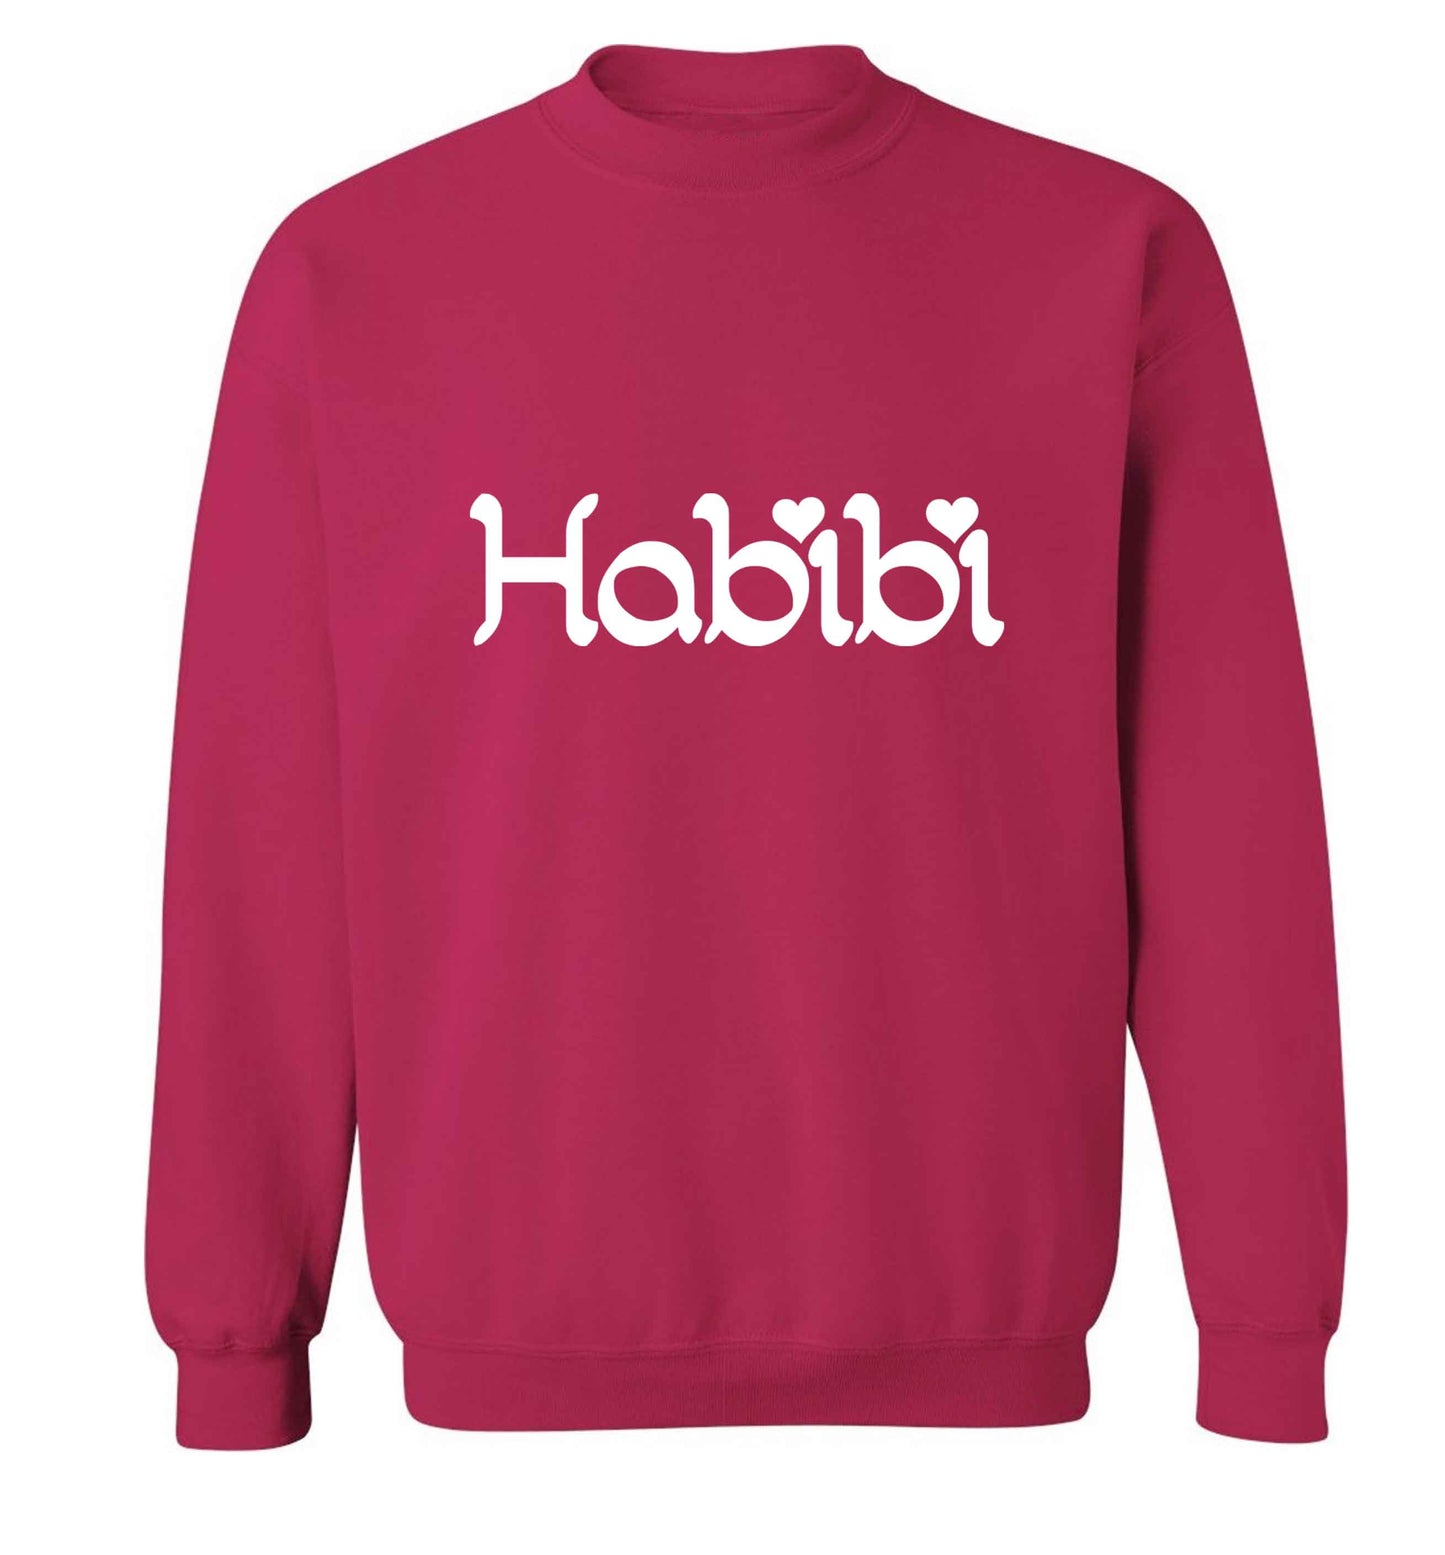 Habibi adult's unisex pink sweater 2XL